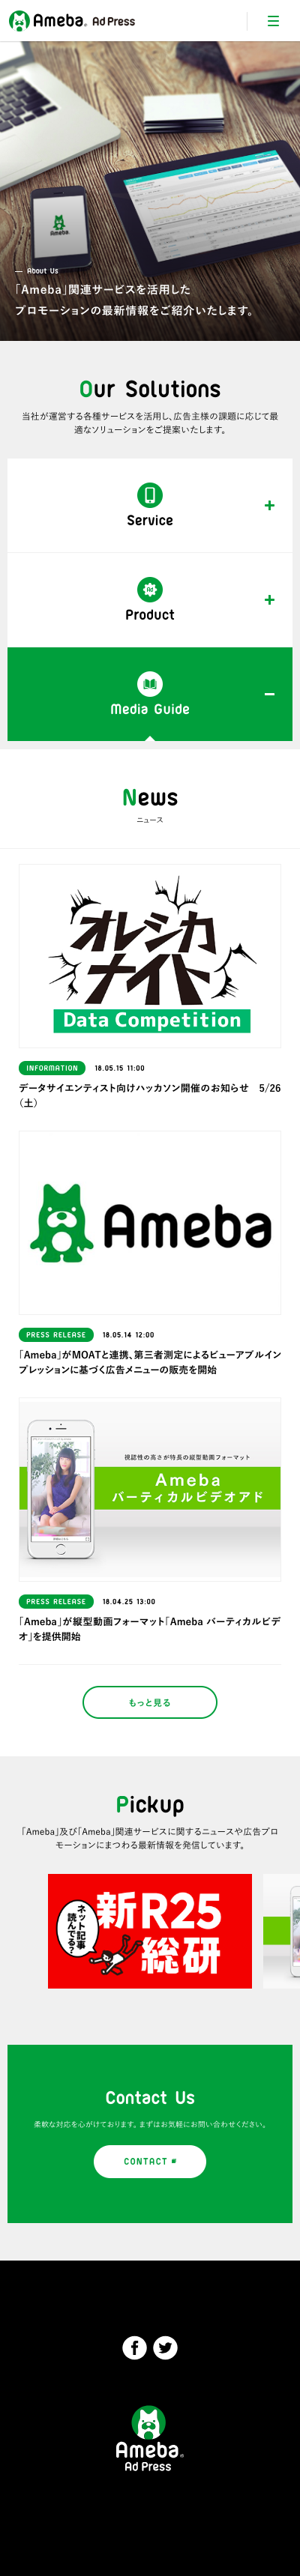 Ameba AdPress